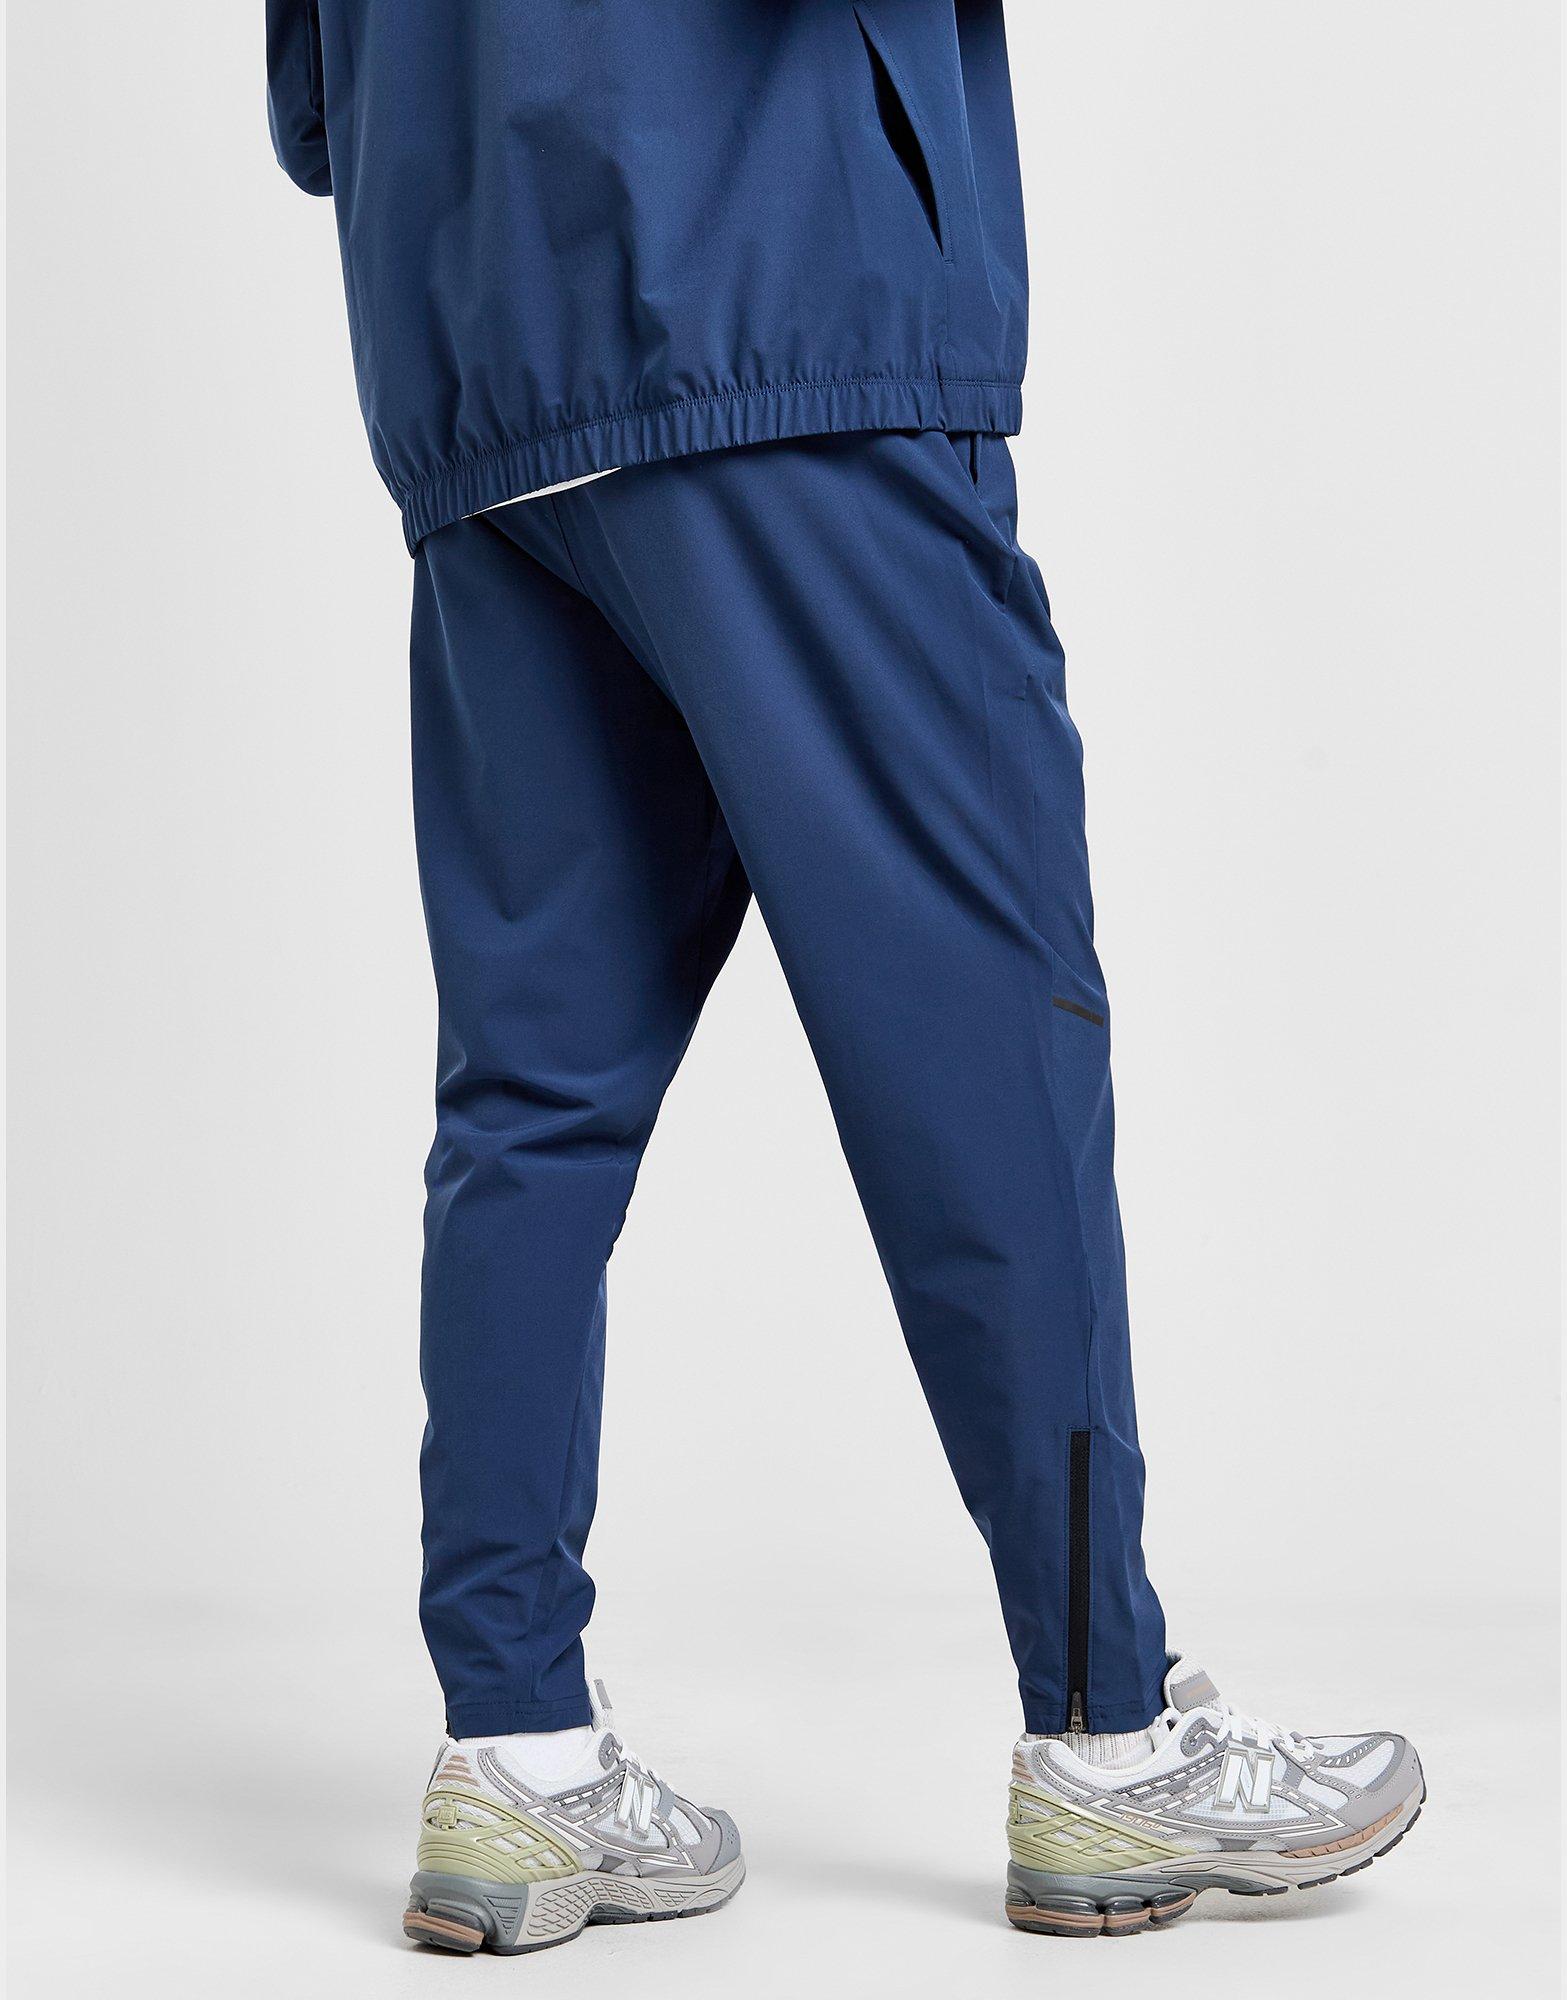 New Balance Blue Active Pants Size XL - 71% off